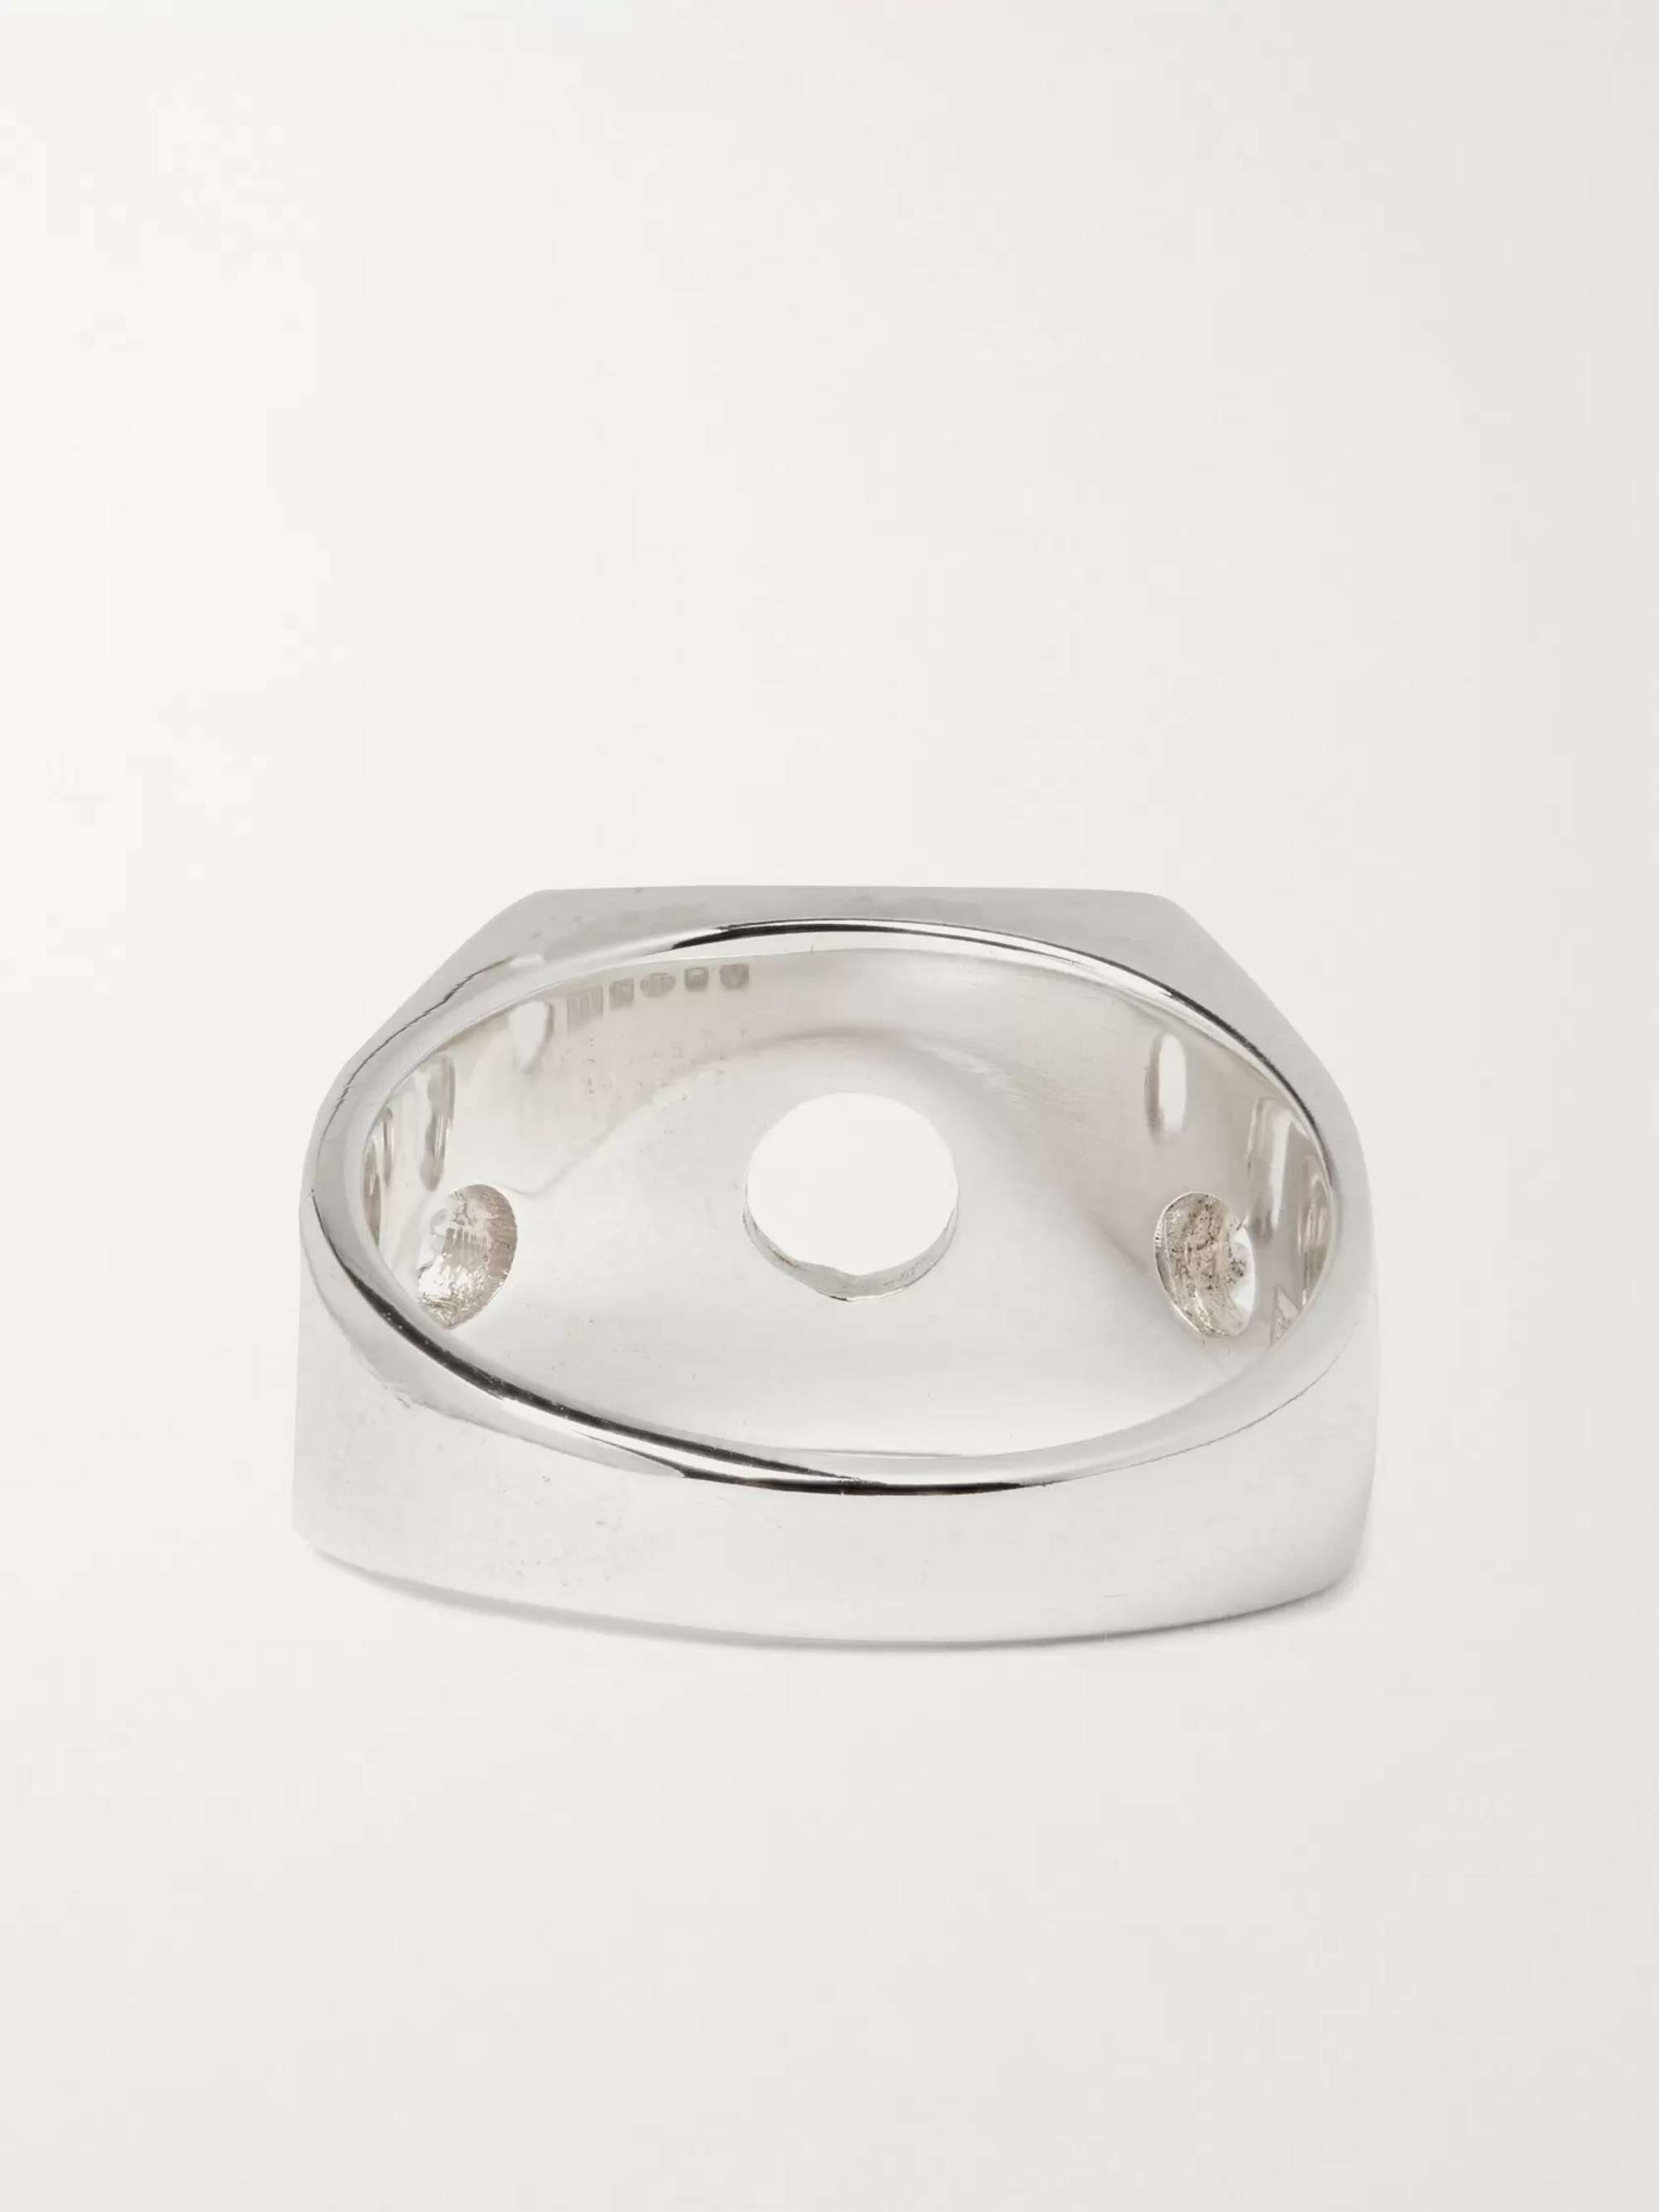 BLEUE BURNHAM Marigold Sterling Silver Signet Ring